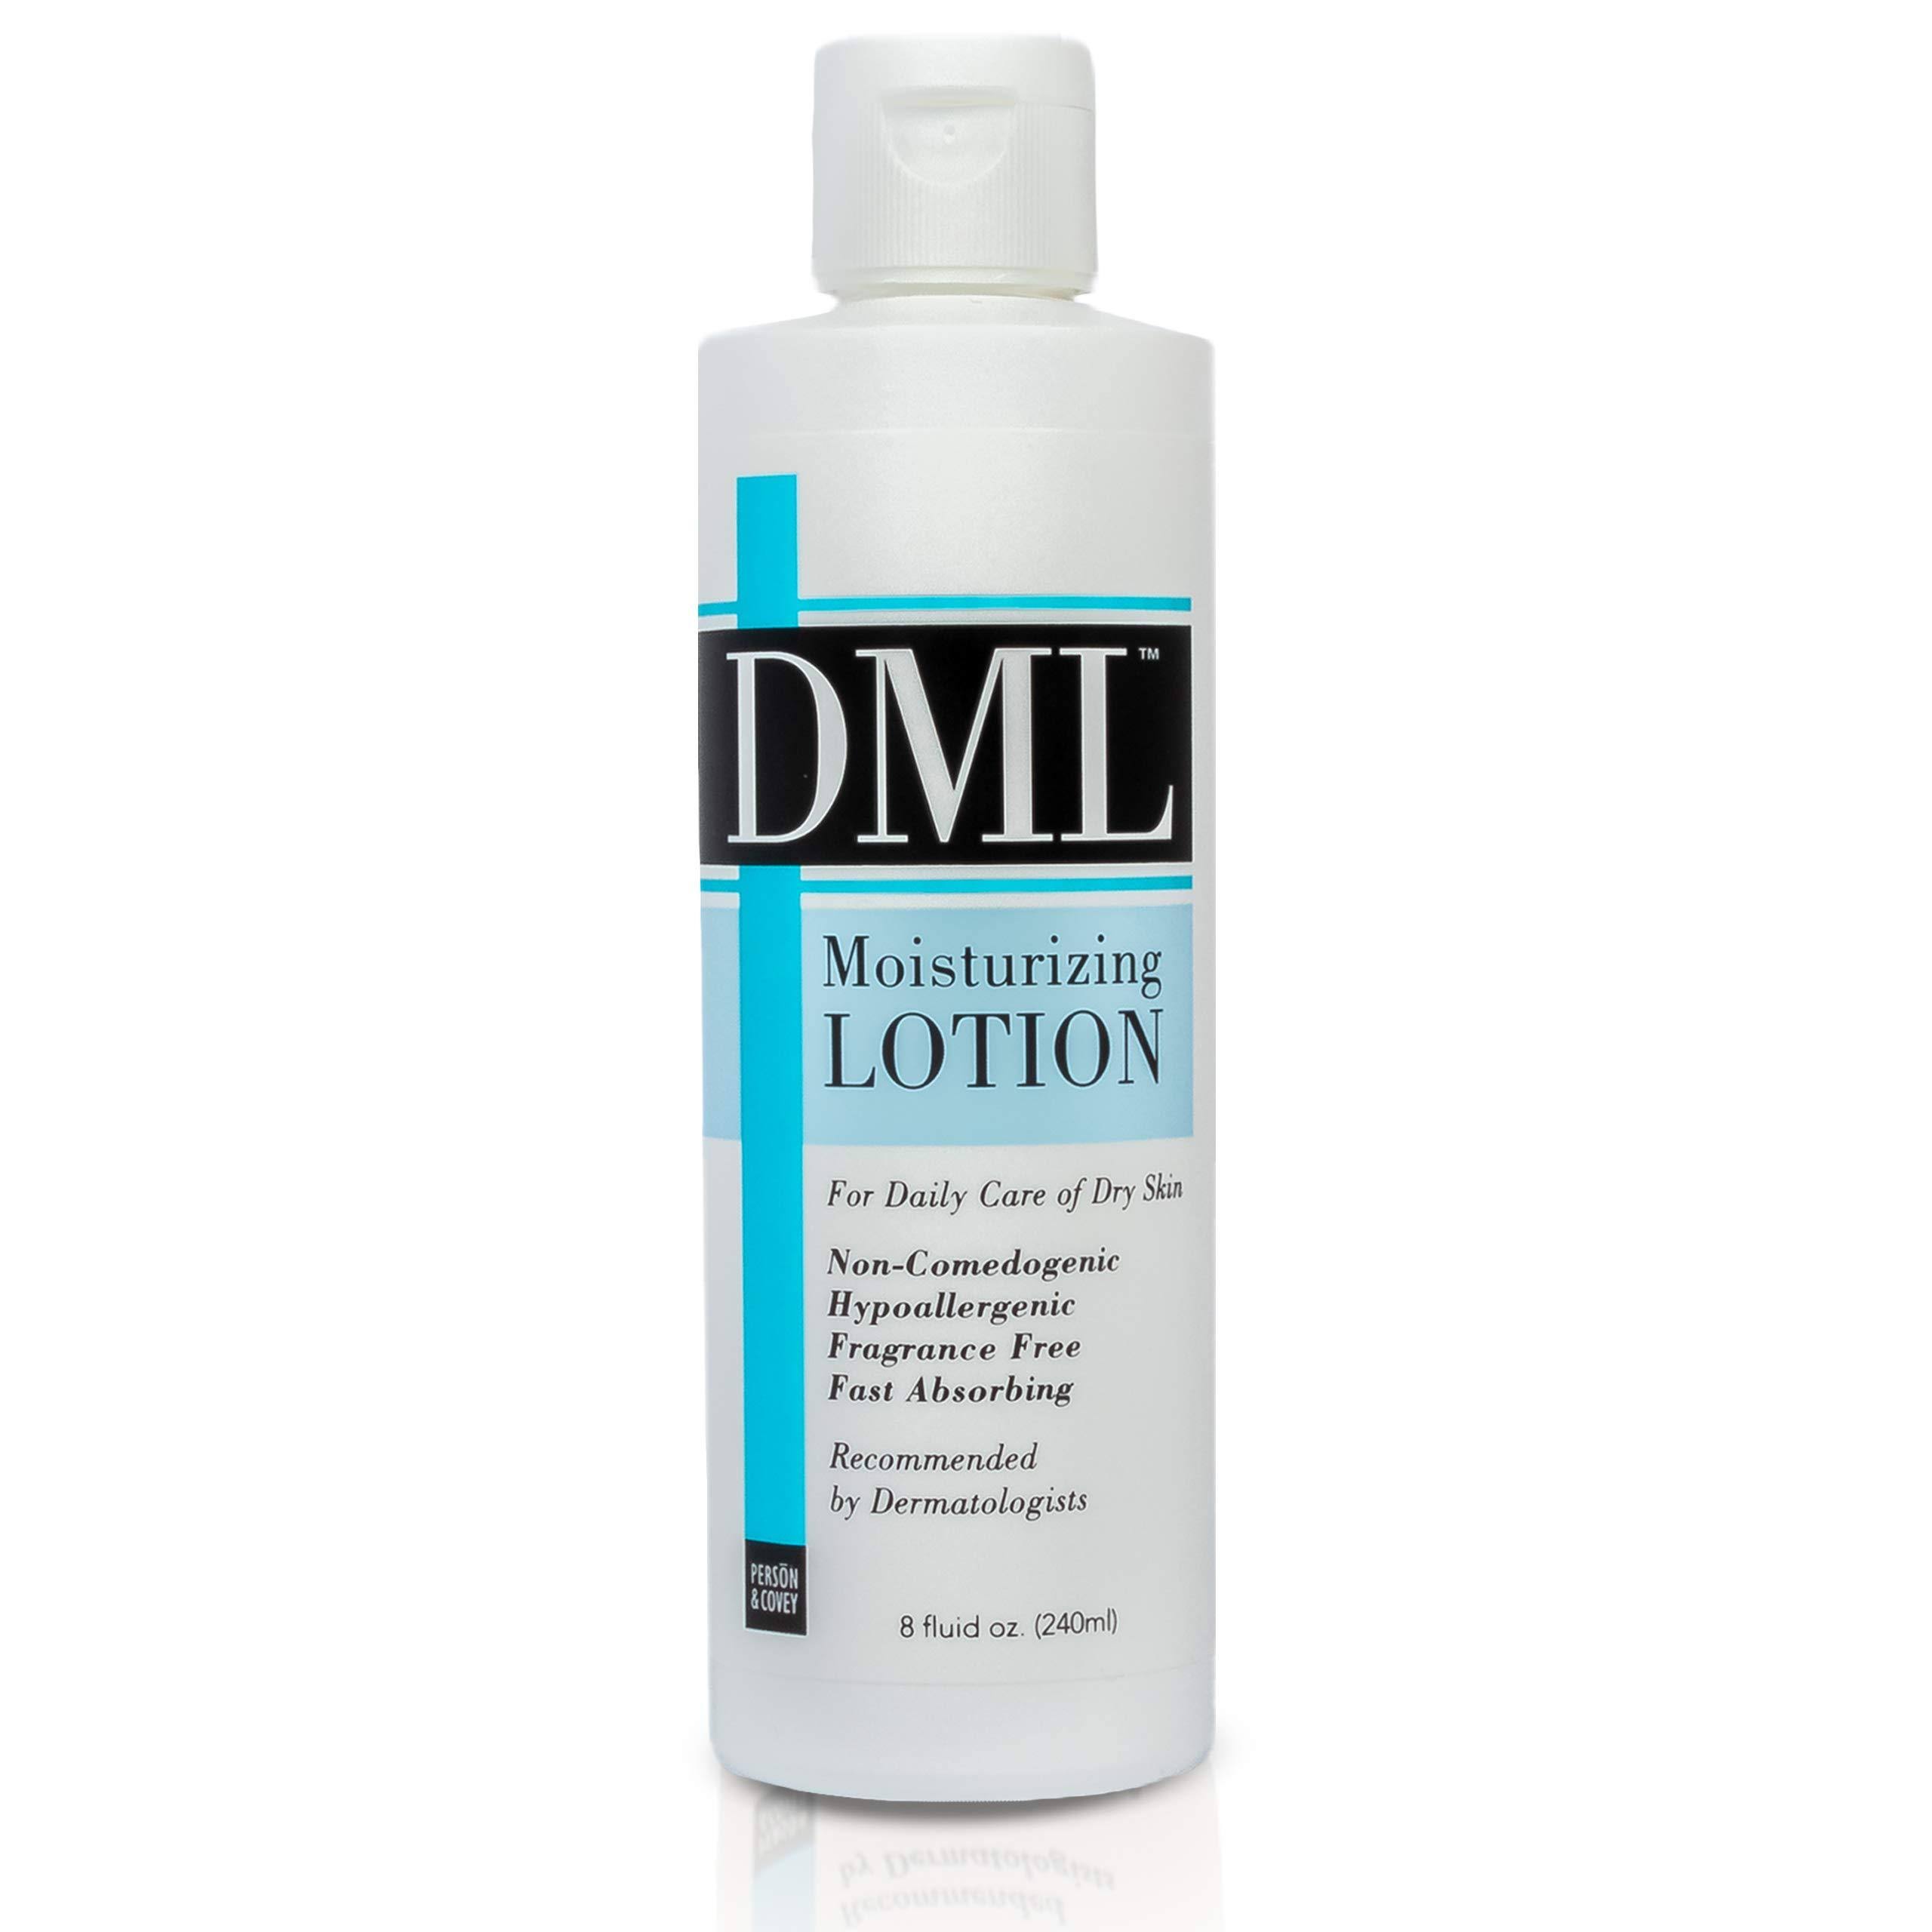 Dml Moisturizing Lotion - Fragrance Free, 8oz